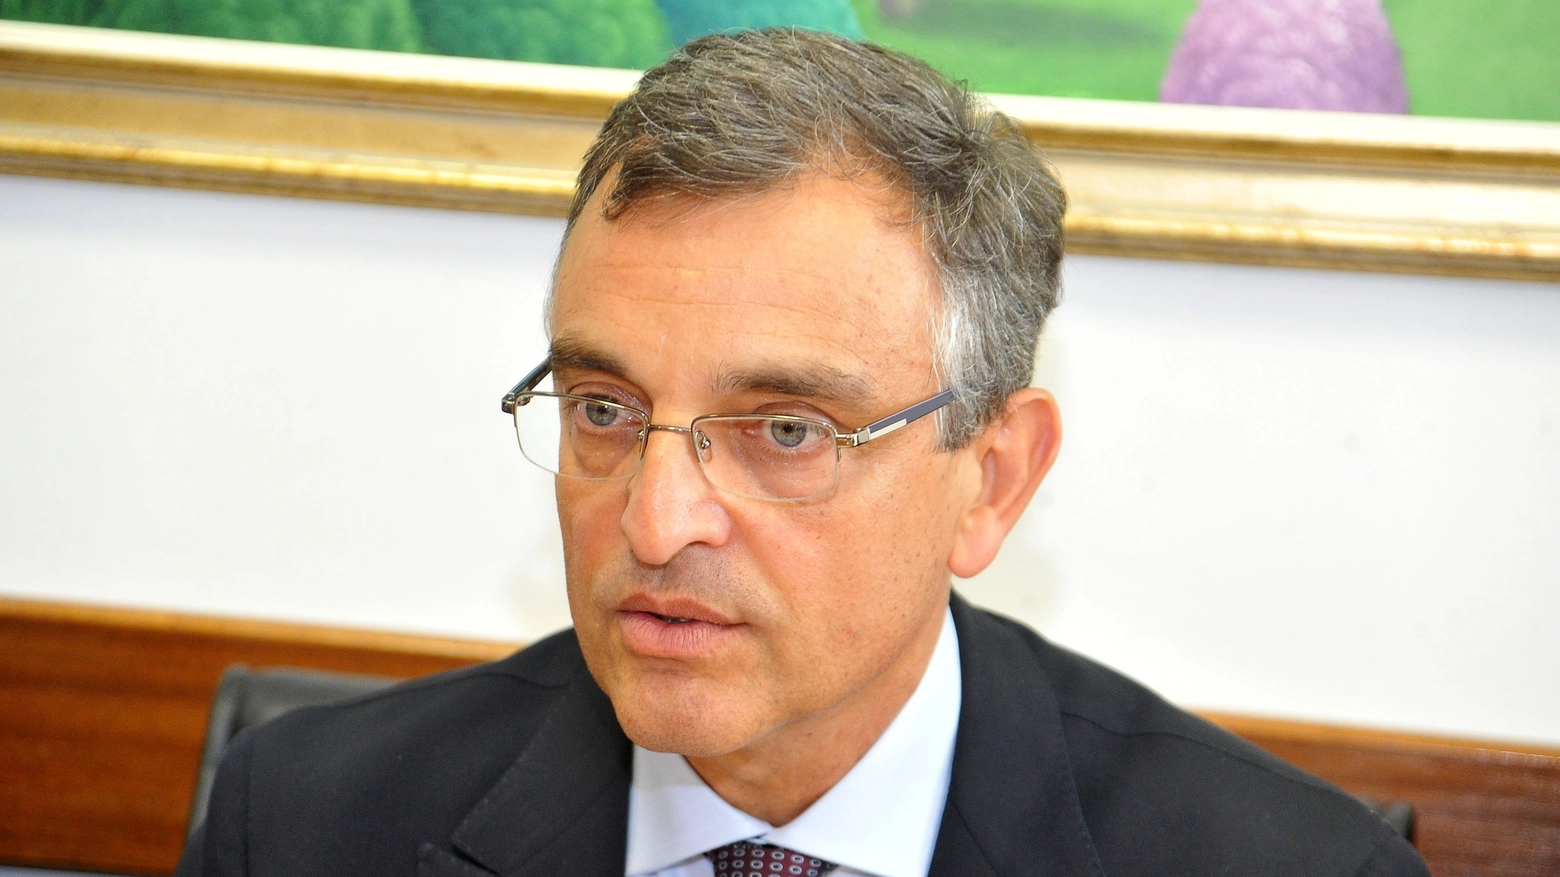 Roberto Rossi